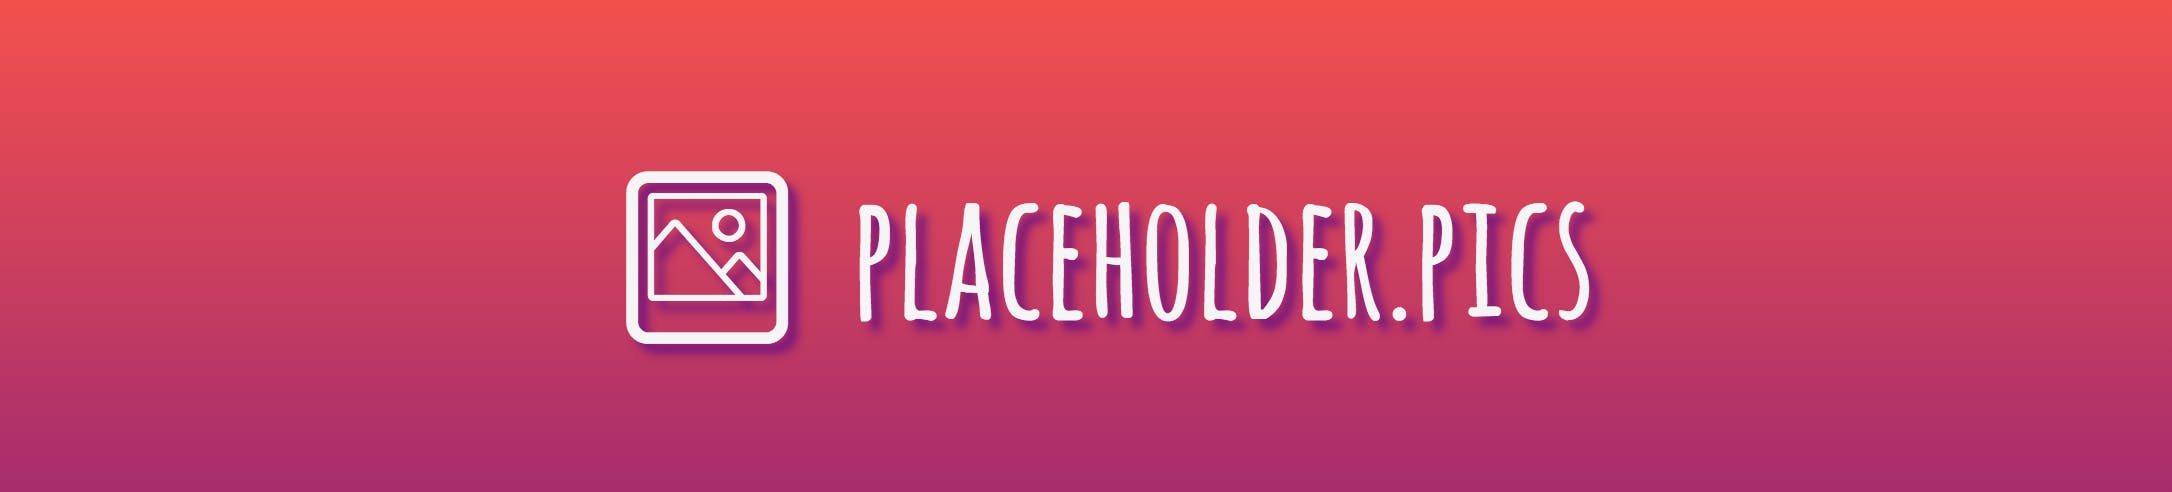 placeholder.pics media 1